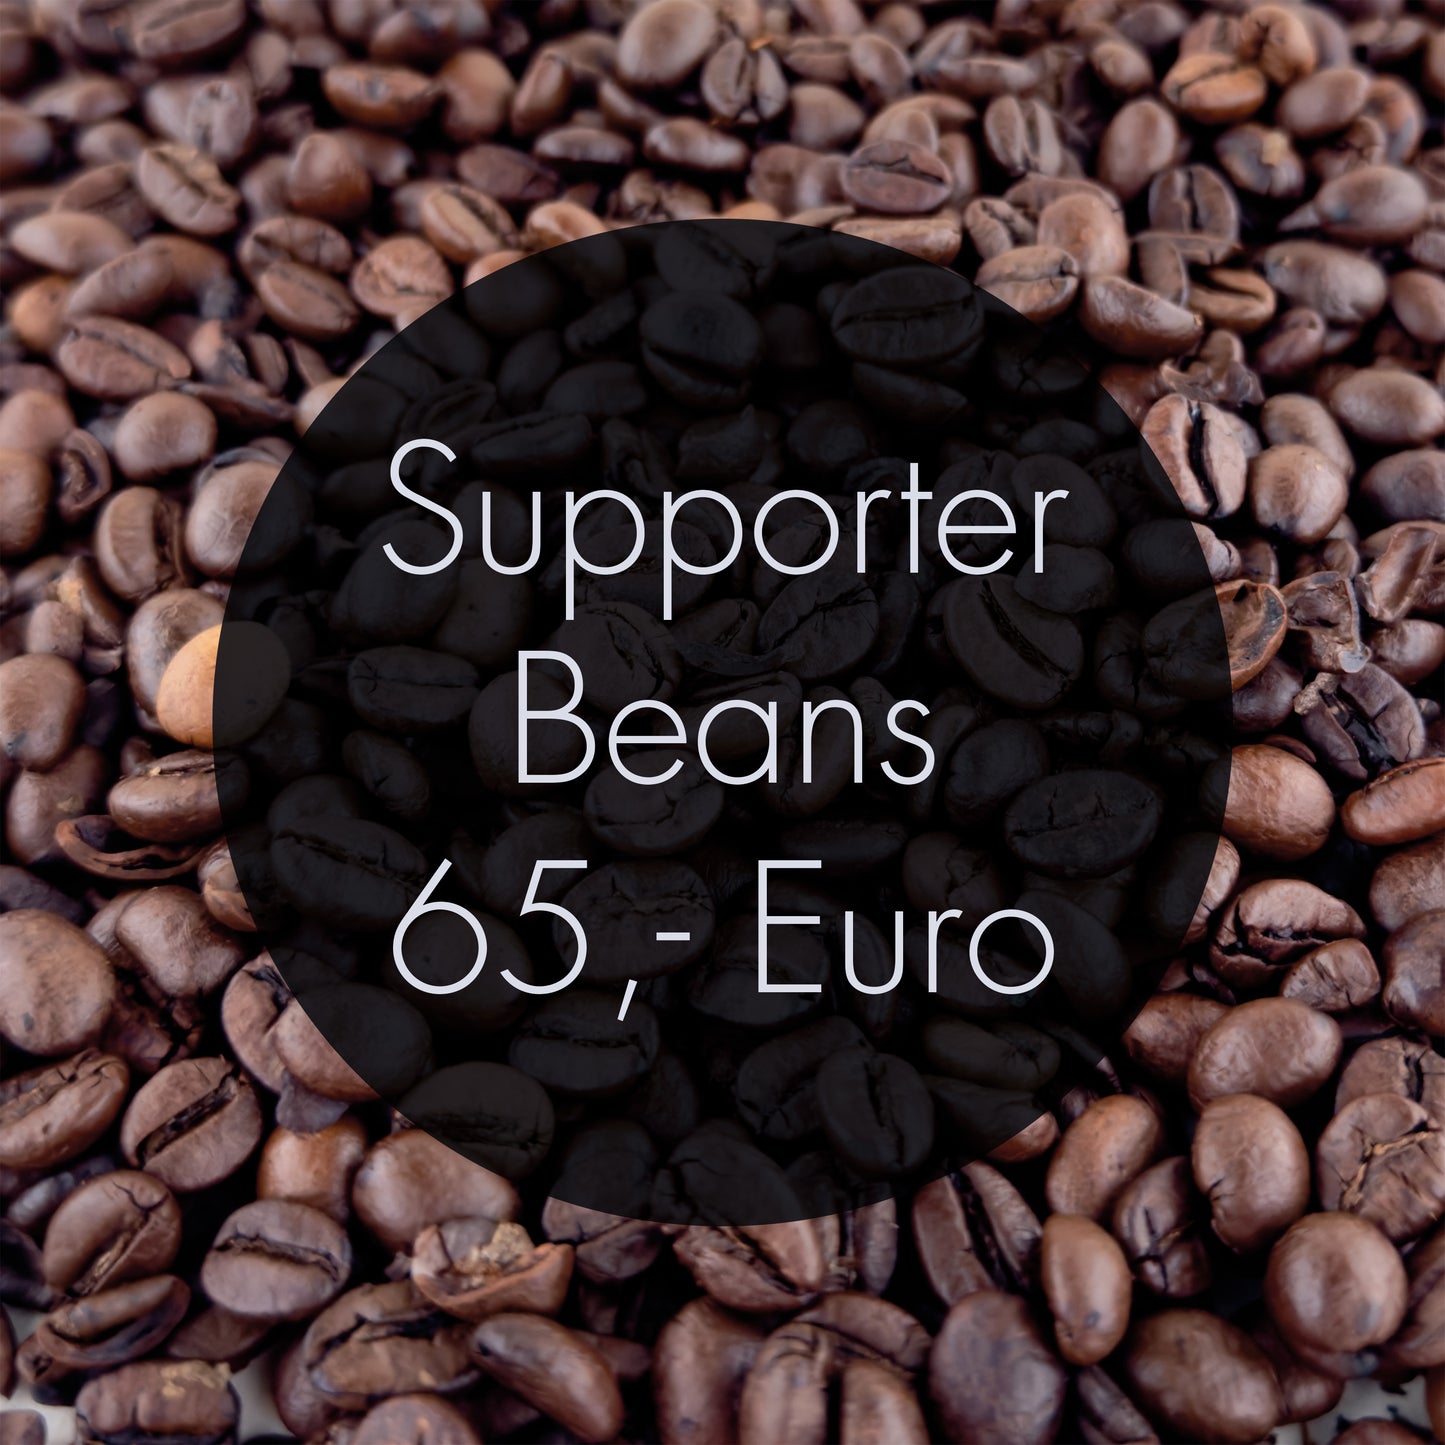 Supporter Beans 65 Euros